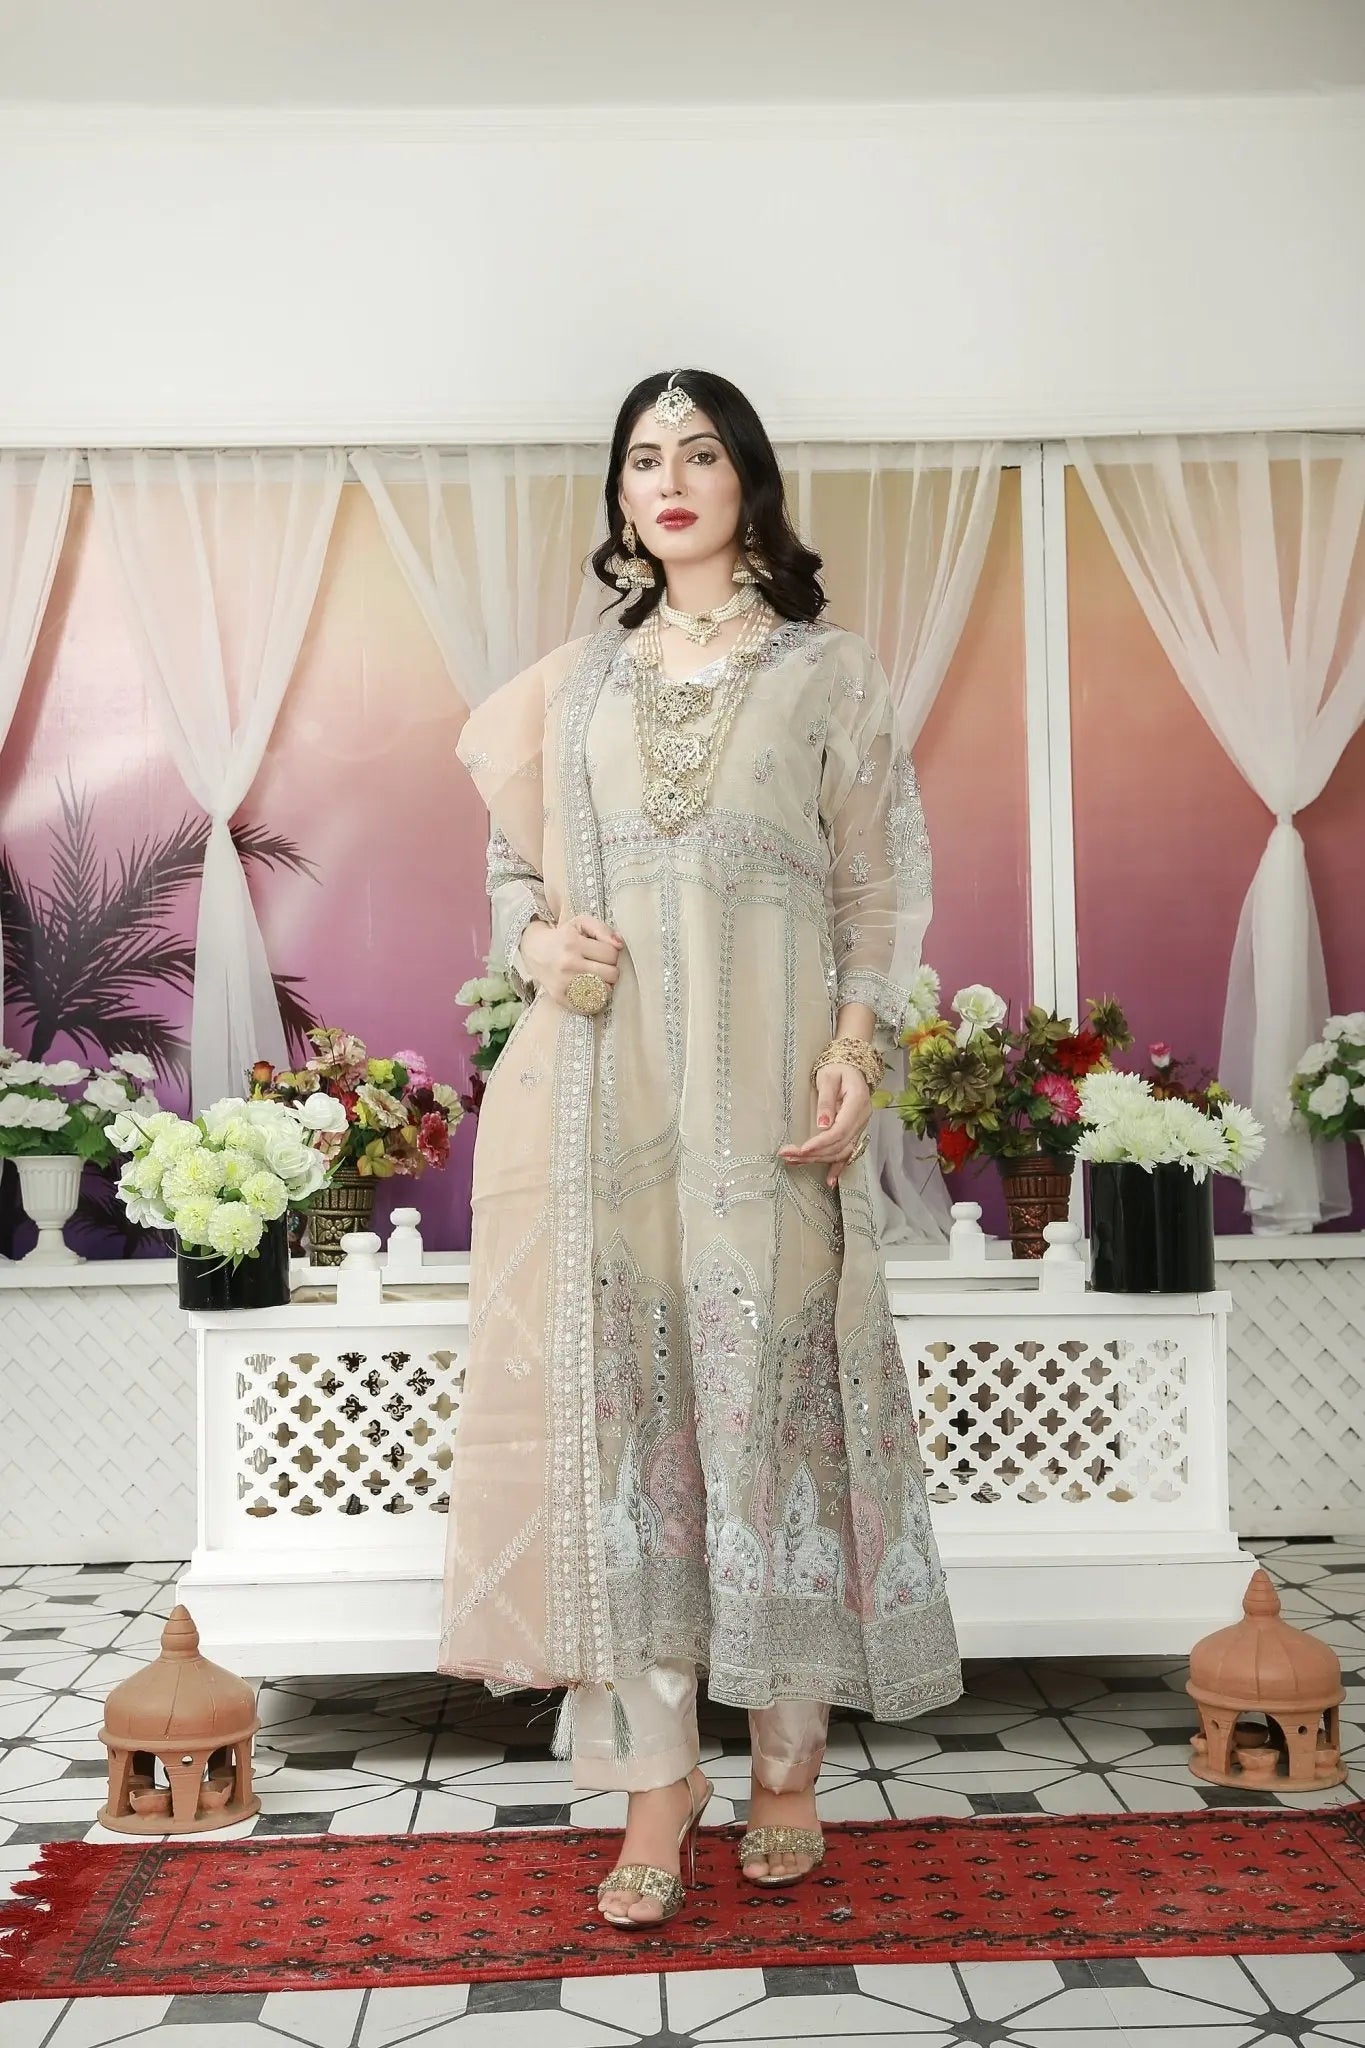 IshDeena Party Wear Formal Outfits Indian Pakistani Wedding Dresses for Women Designer - IshDeena